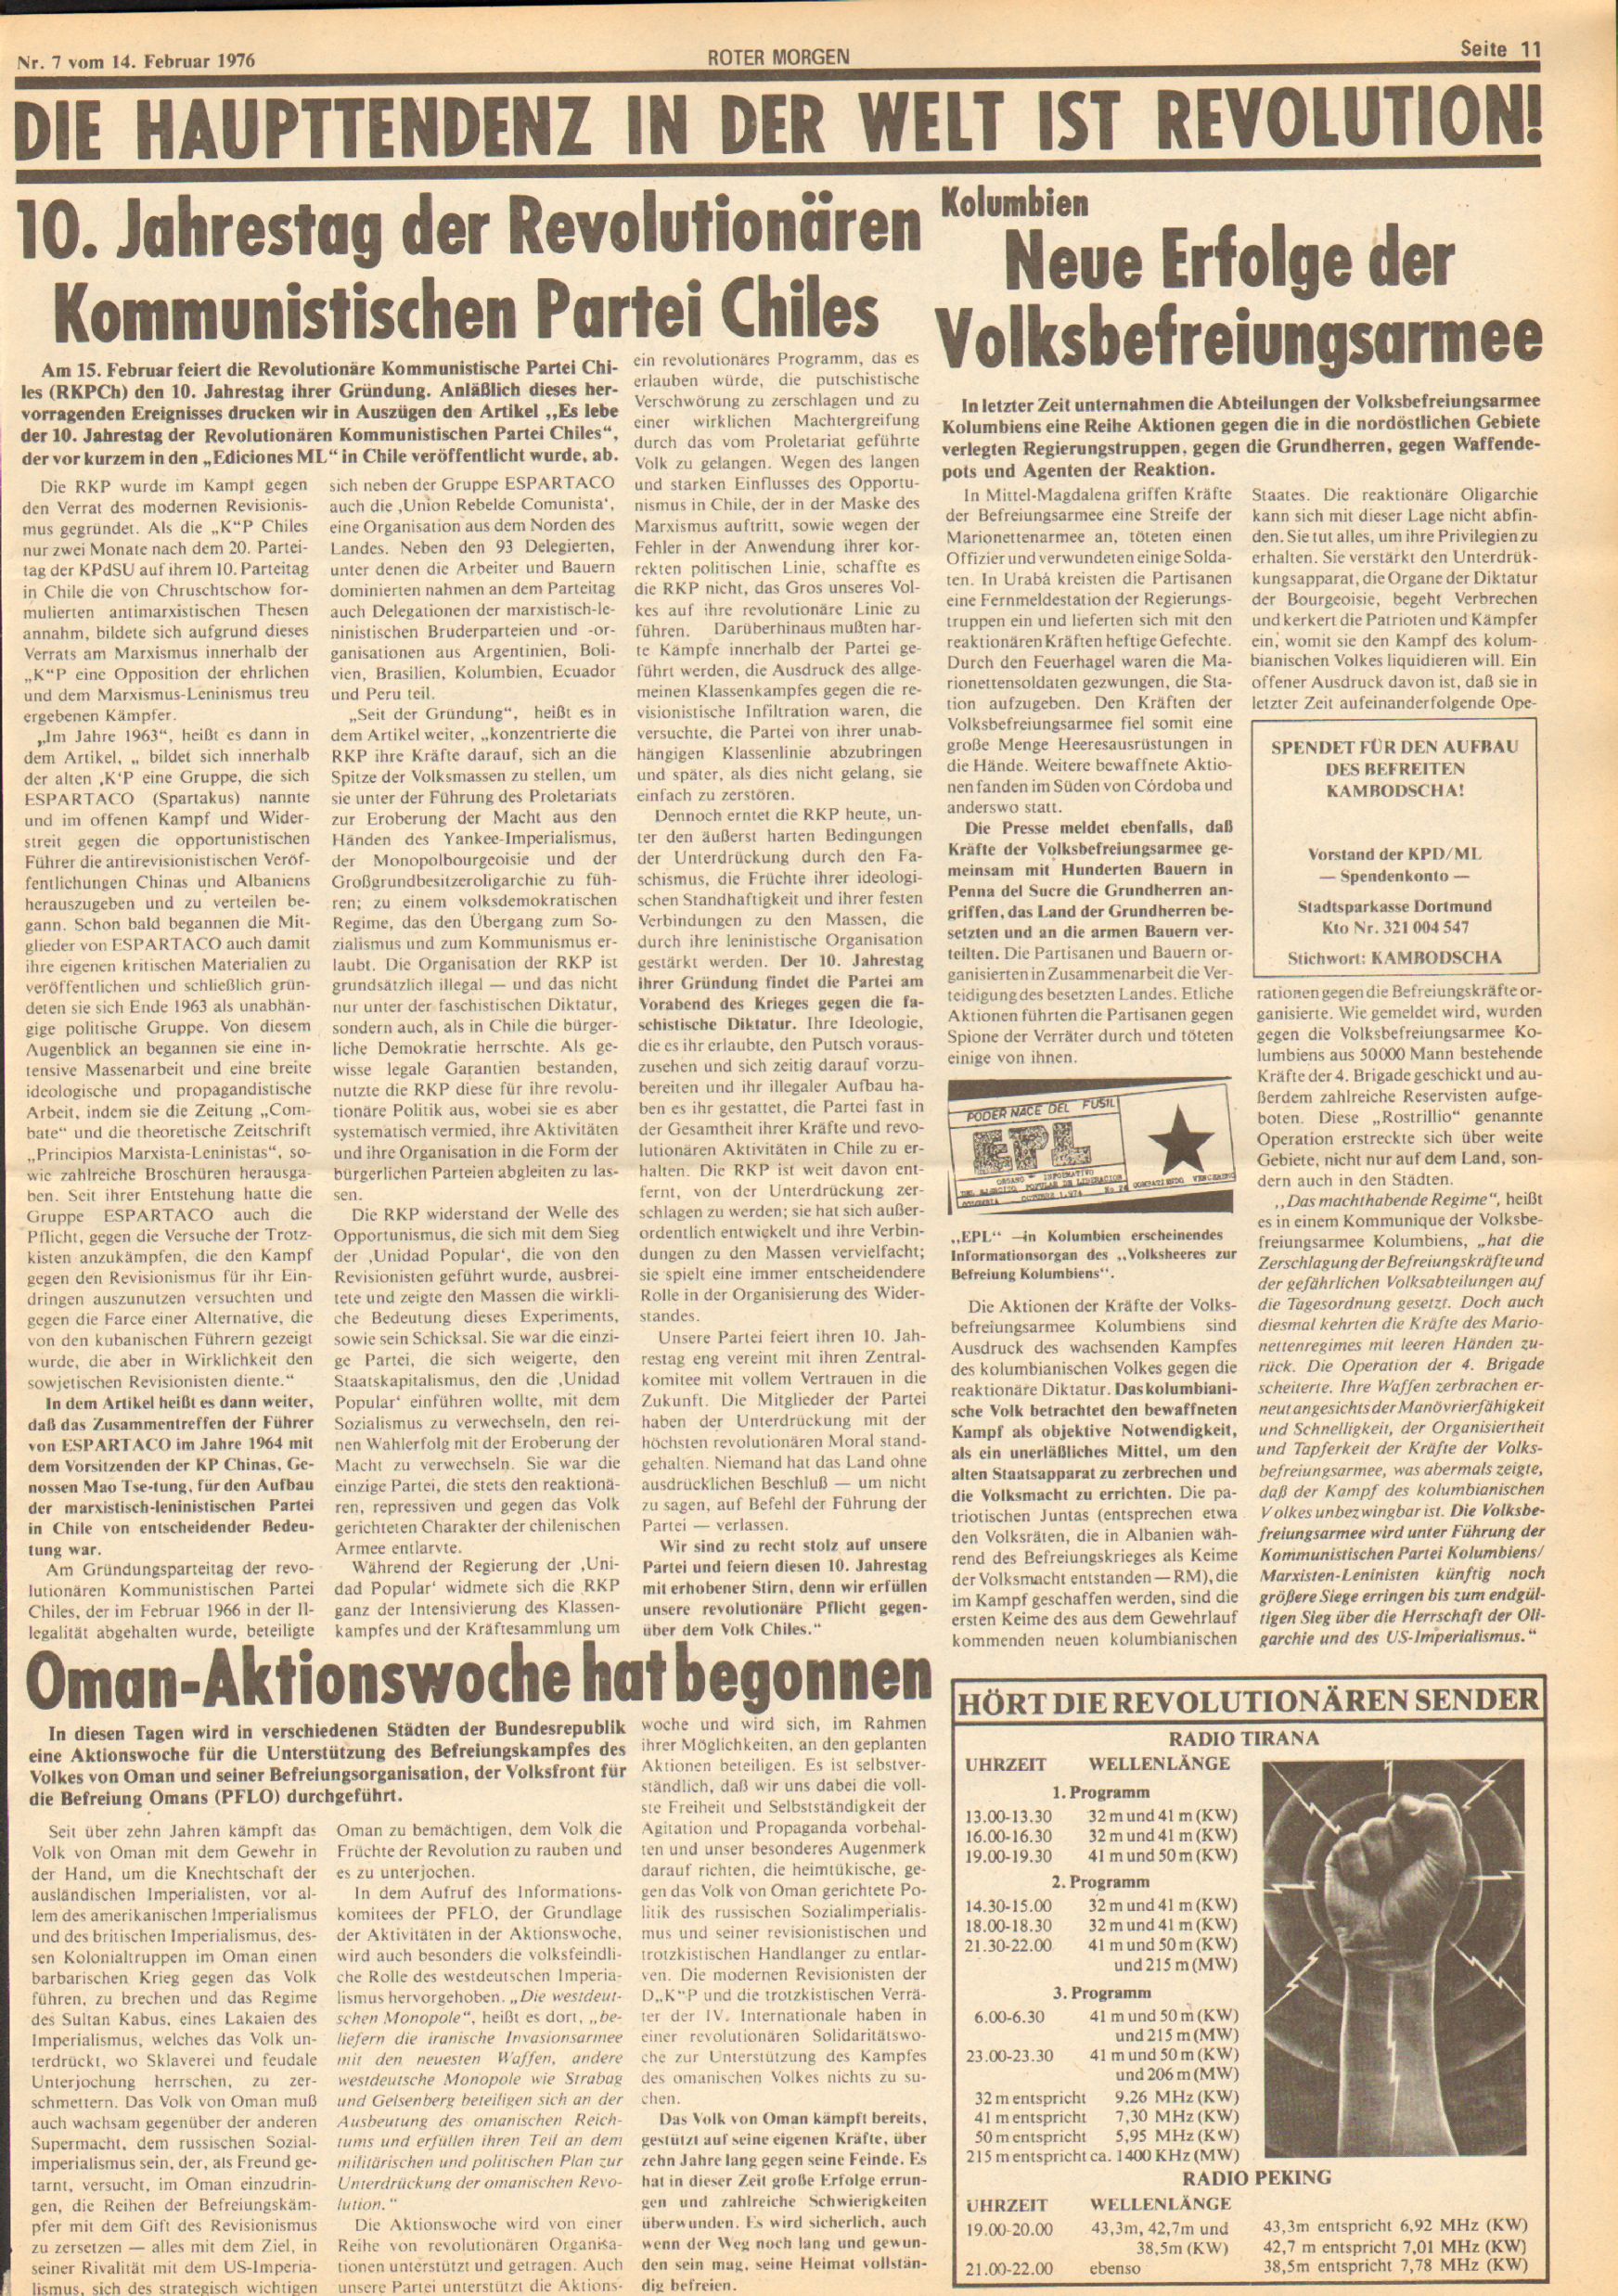 Roter Morgen, 10. Jg., 14. Februar 1976, Nr. 7, Seite 11